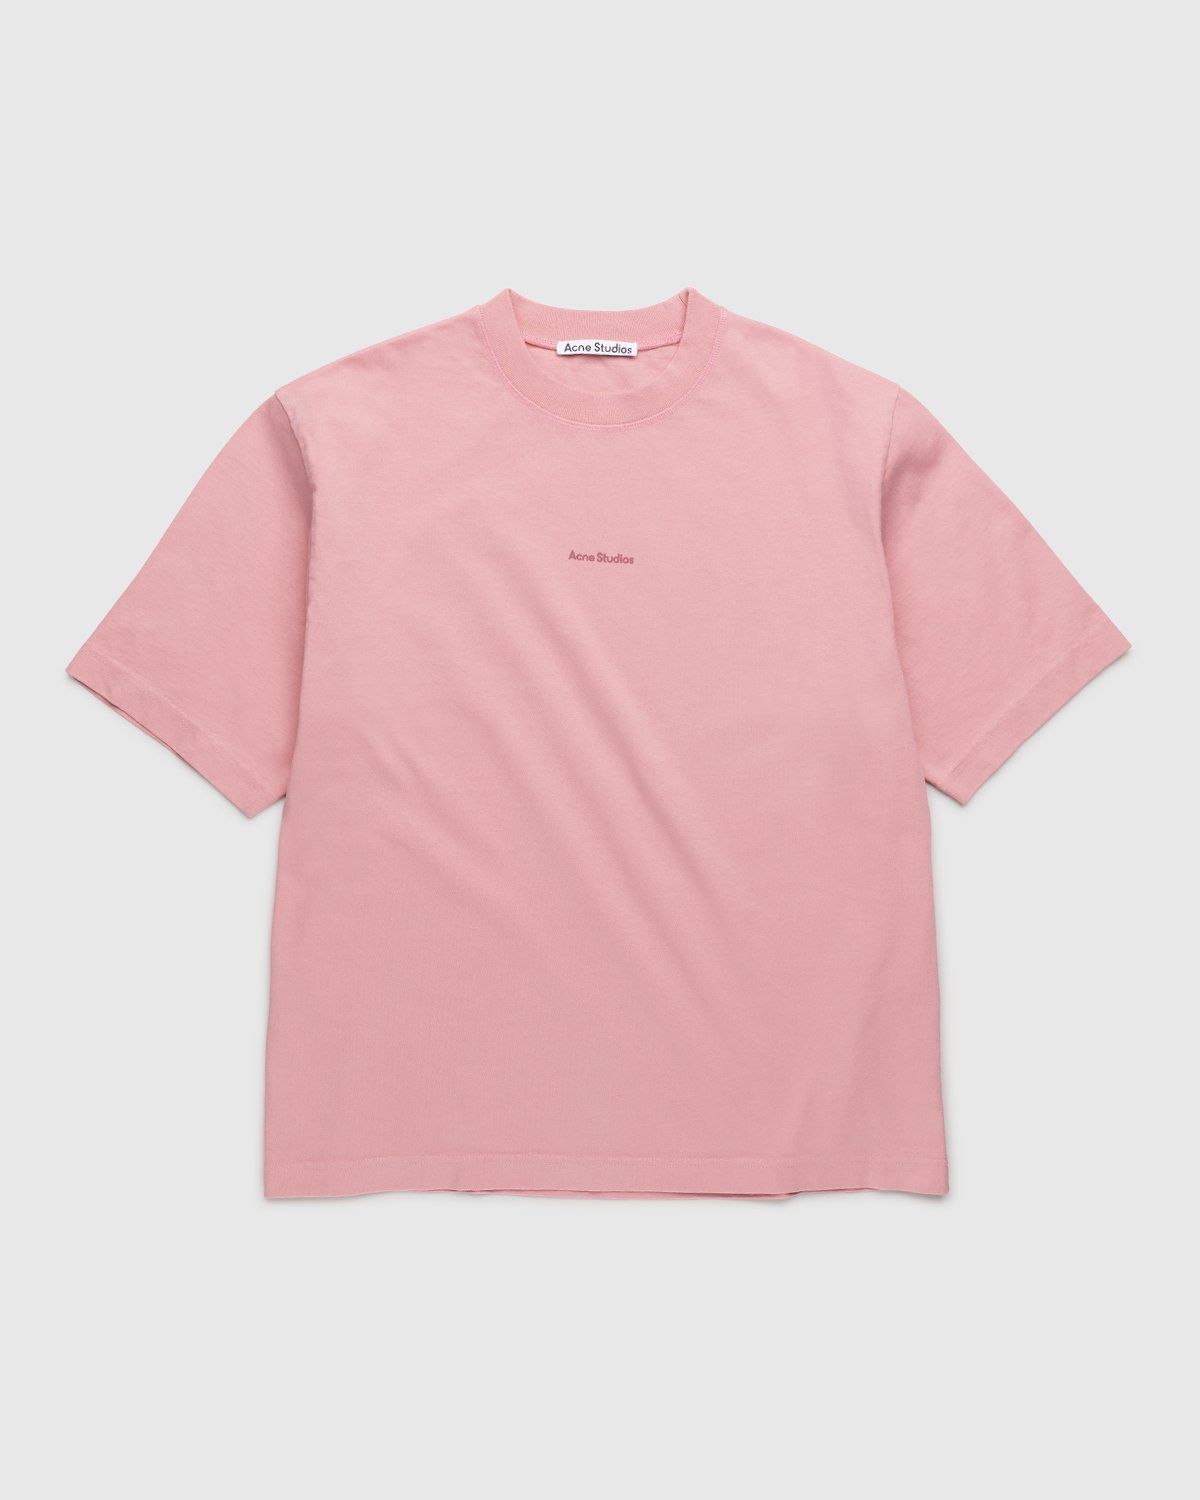 Acne Studios - Logo T-Shirt Pink - Clothing - Pink - Image 1